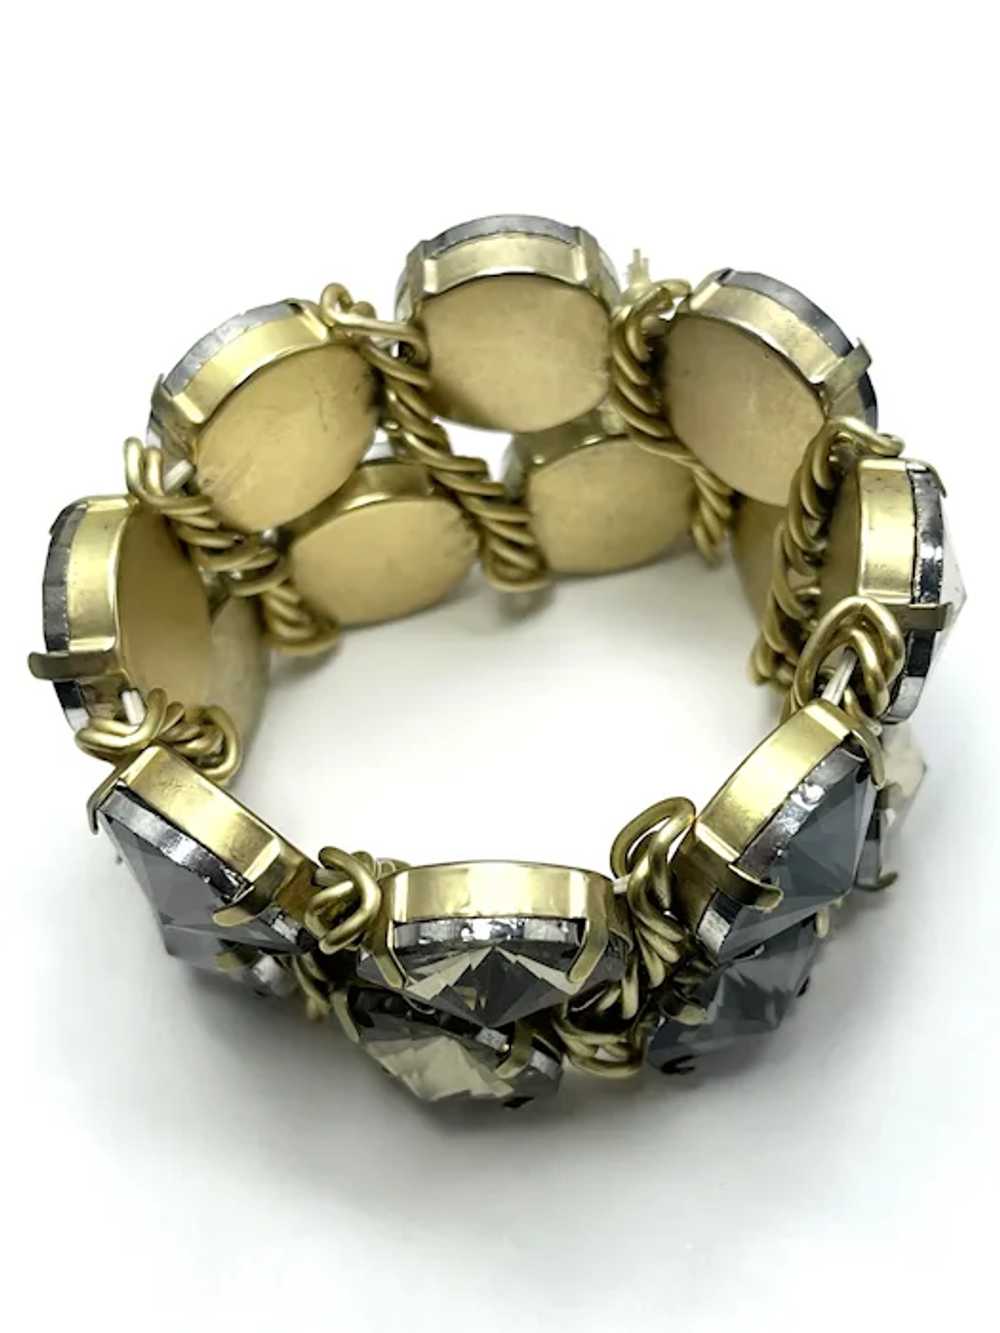 Vintage Rhinestone Jeweled Stretch Bracelet - image 5